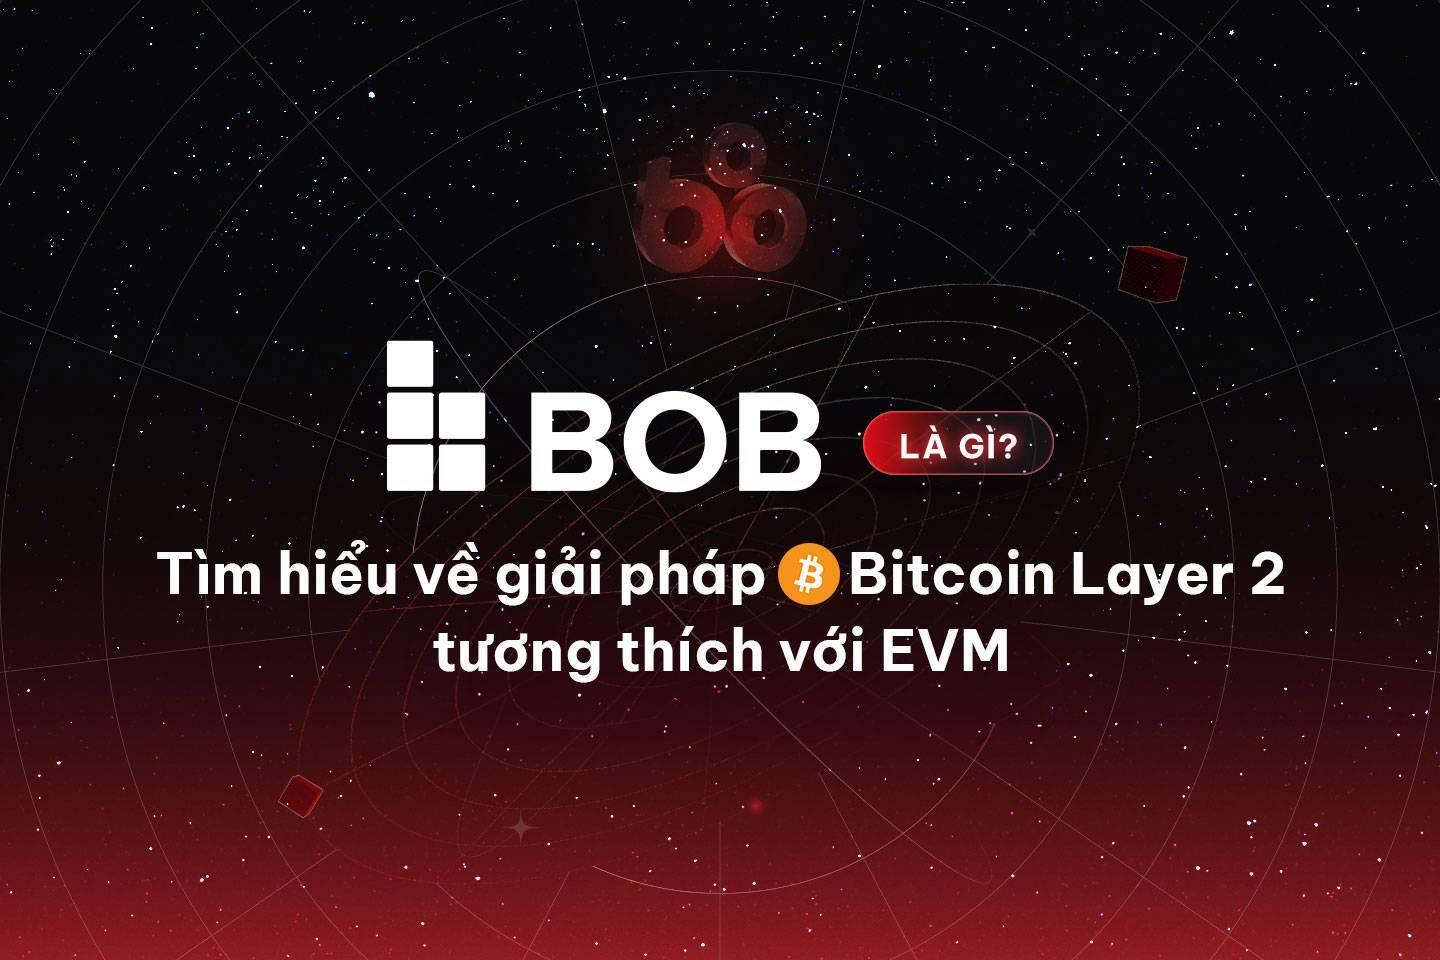 bob-la-gi-tim-hieu-ve-giai-phap-bitcoin-layer-2-tuong-thich-voi-evm